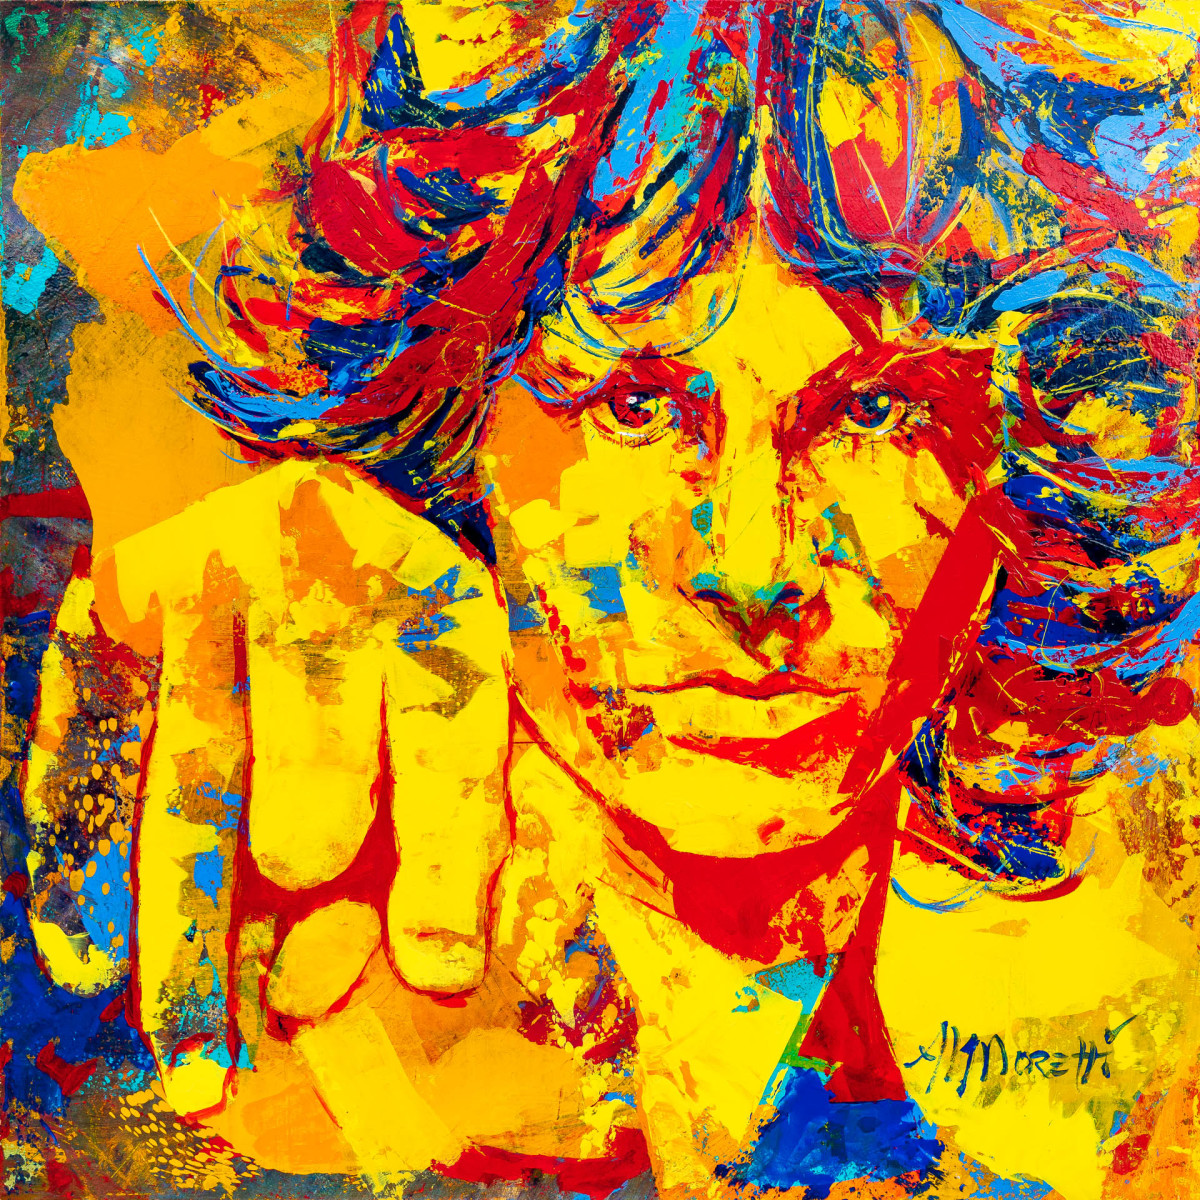 Jim Morrison, "Rider on the Storm" by Al Moretti 